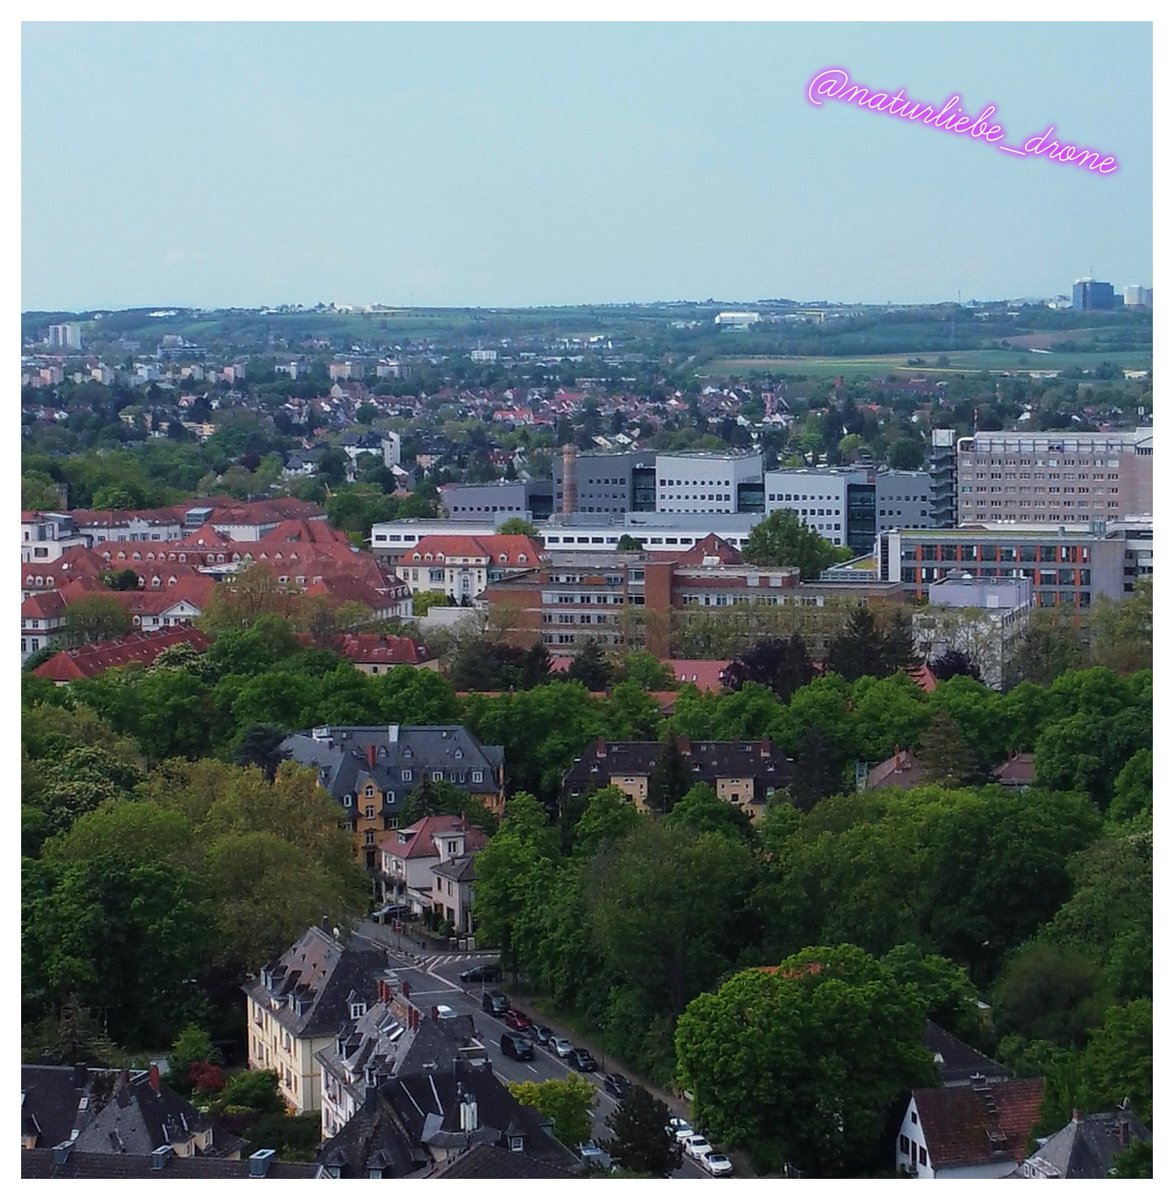 Mainz 🙂 🦅🛸

#naturliebe_drone #naturliebedrone #mainz #mainzliebe #stadt #stadtreise #reise #reisen #reisereise #fotostadt #arhitecture #arhitektura  #droneflying #germany #deuschland #drone #droneshots #dronefly #dronepilot #dronepilots #dronefoto #fotodrone